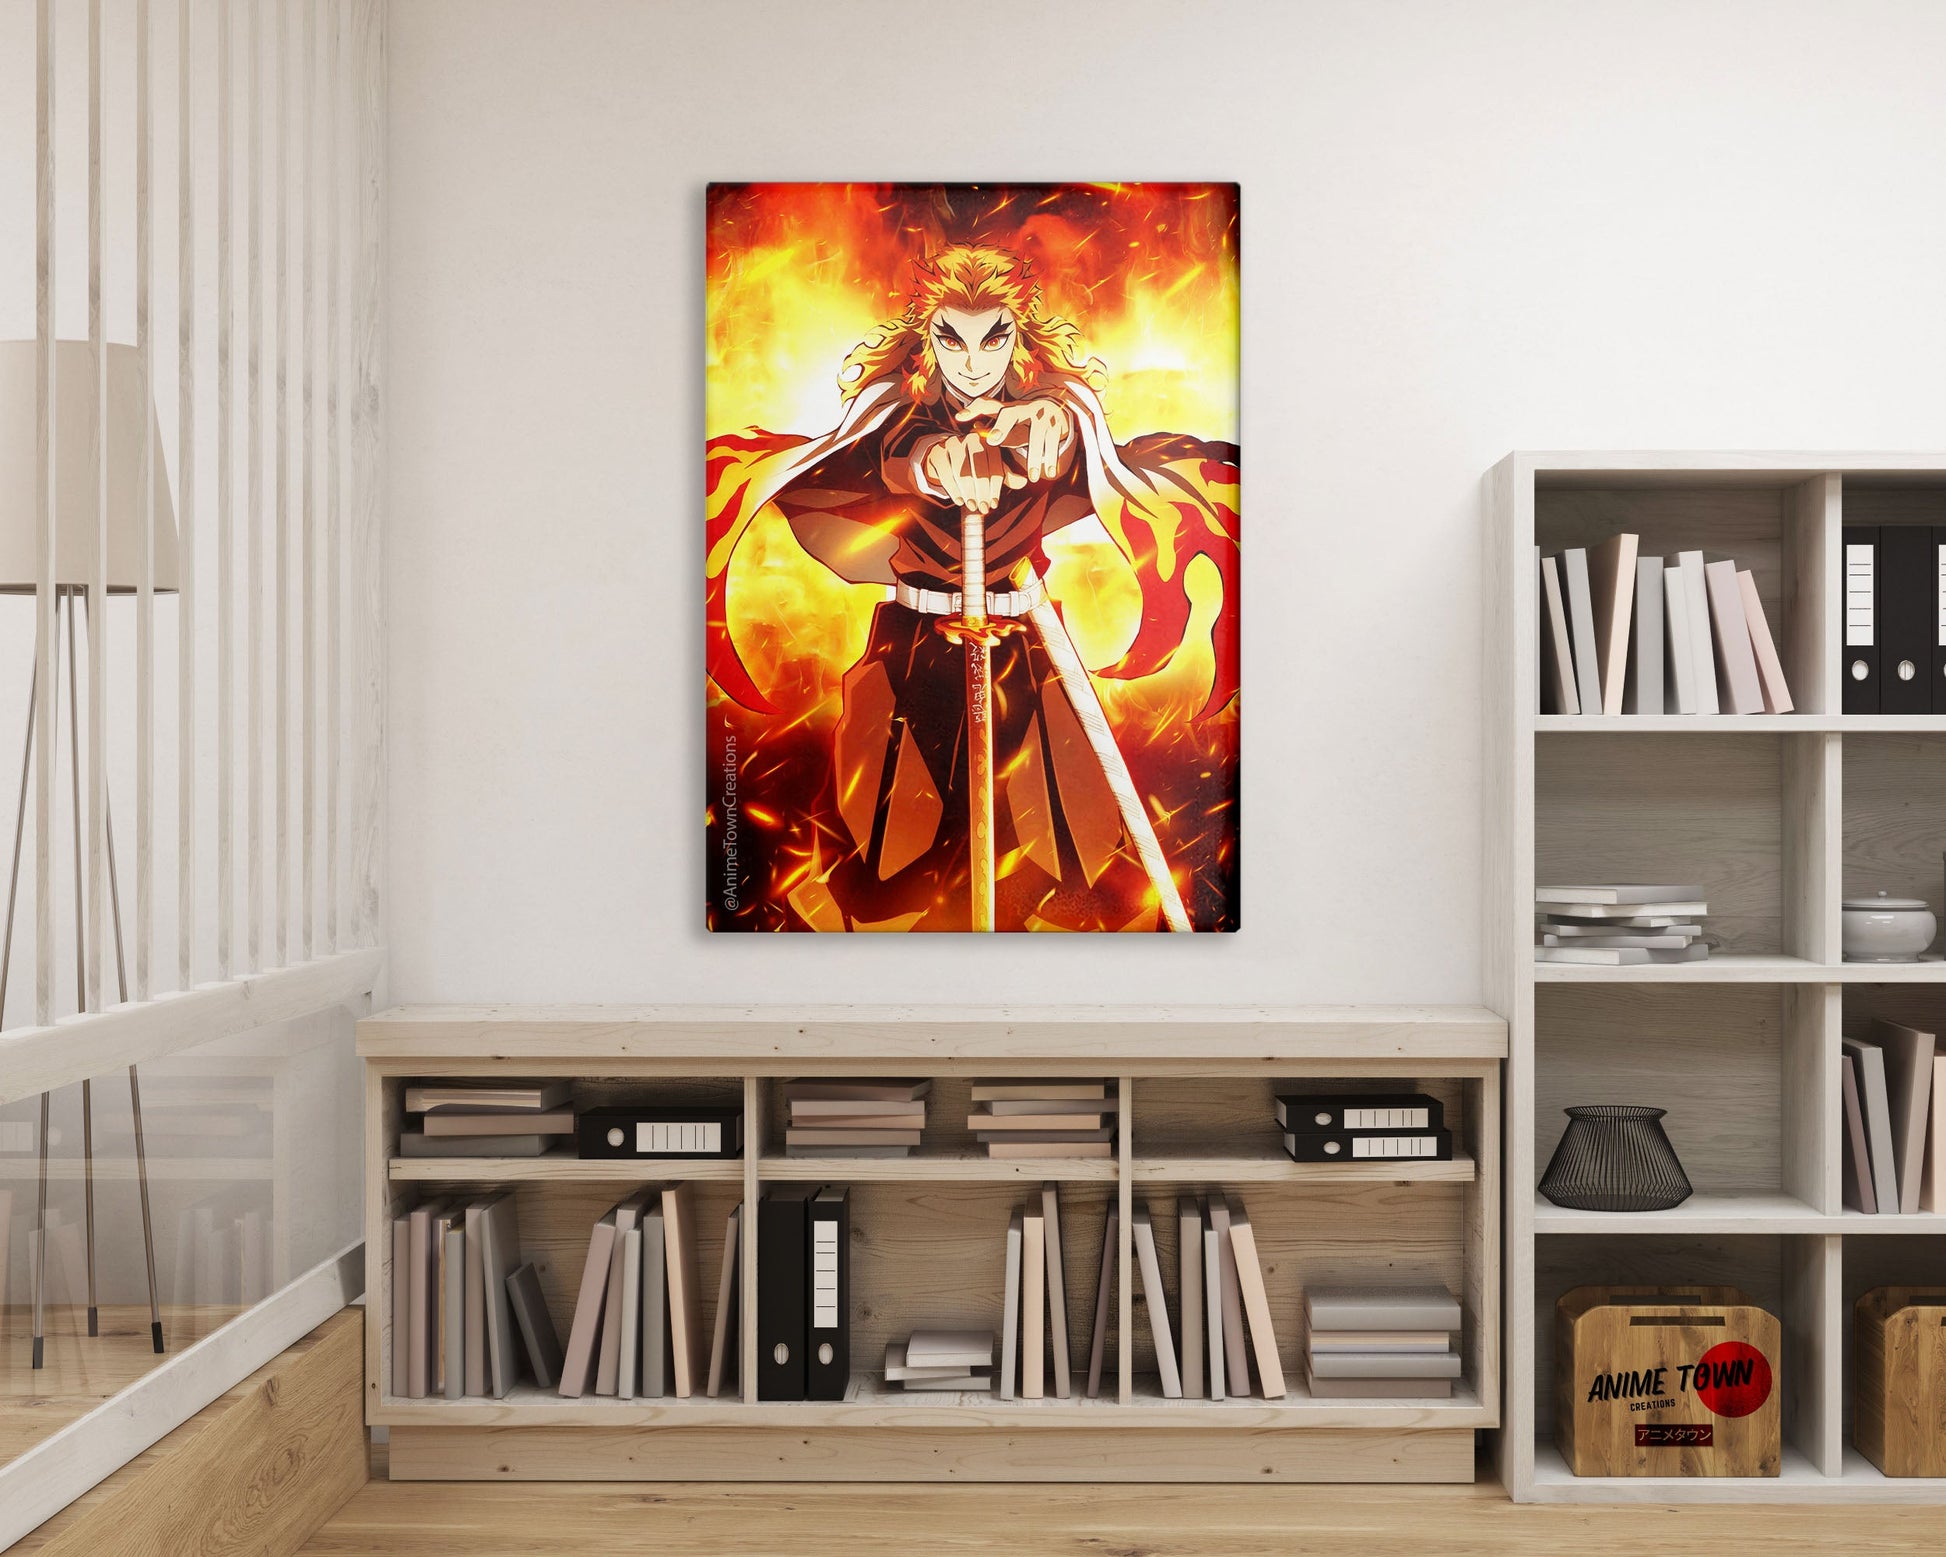 Anime Town Creations Metal Poster Demon Slayer Rengoku Flame Breathing 16" x 24" Home Goods - Anime Demon Slayer Metal Poster